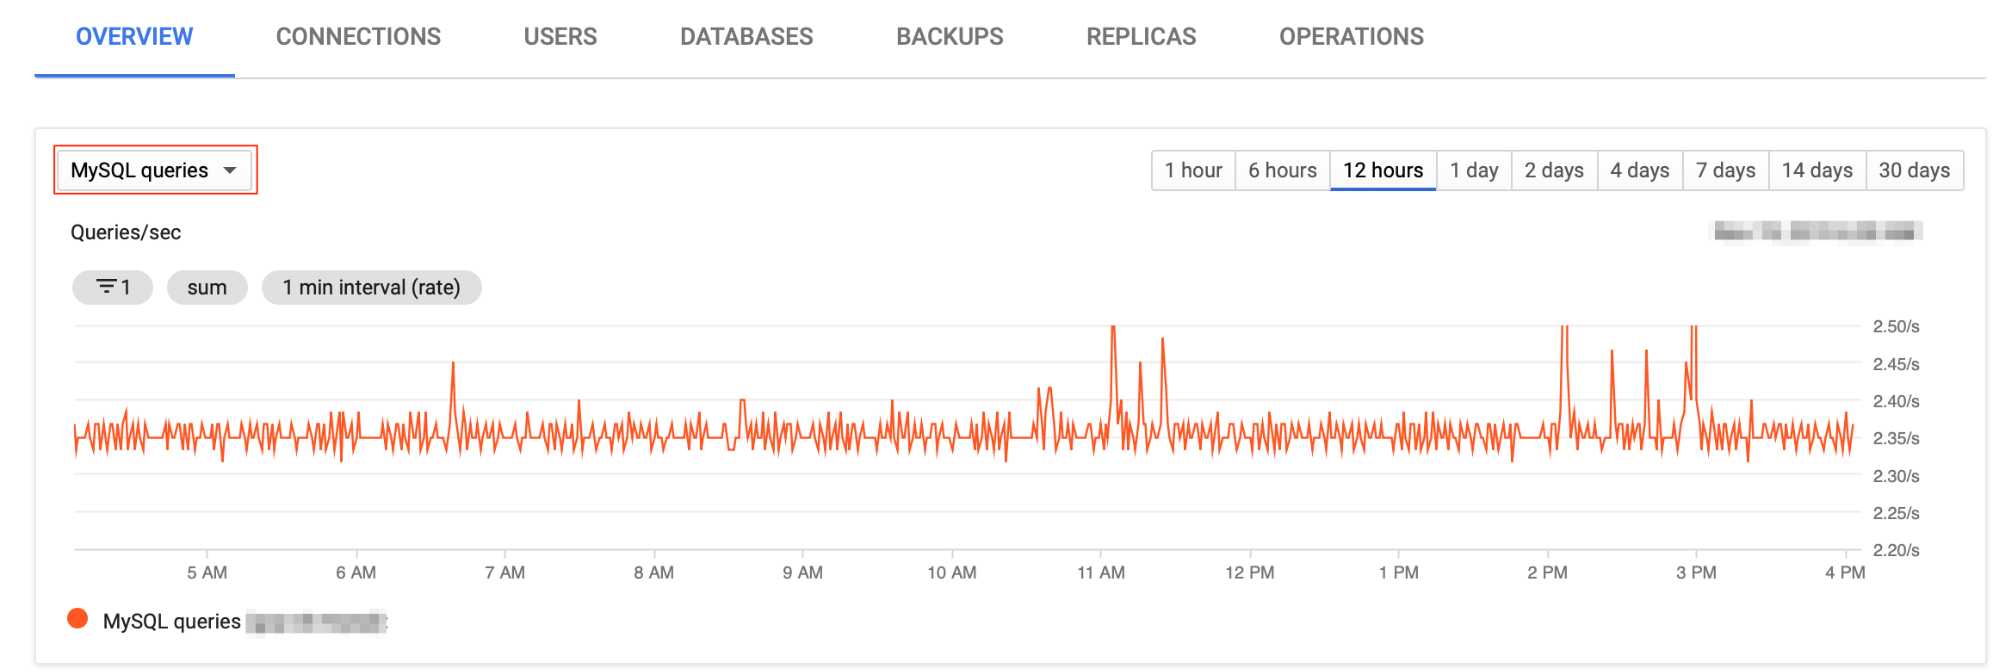 Grafik kueri MySQL selama 12 jam terakhir.